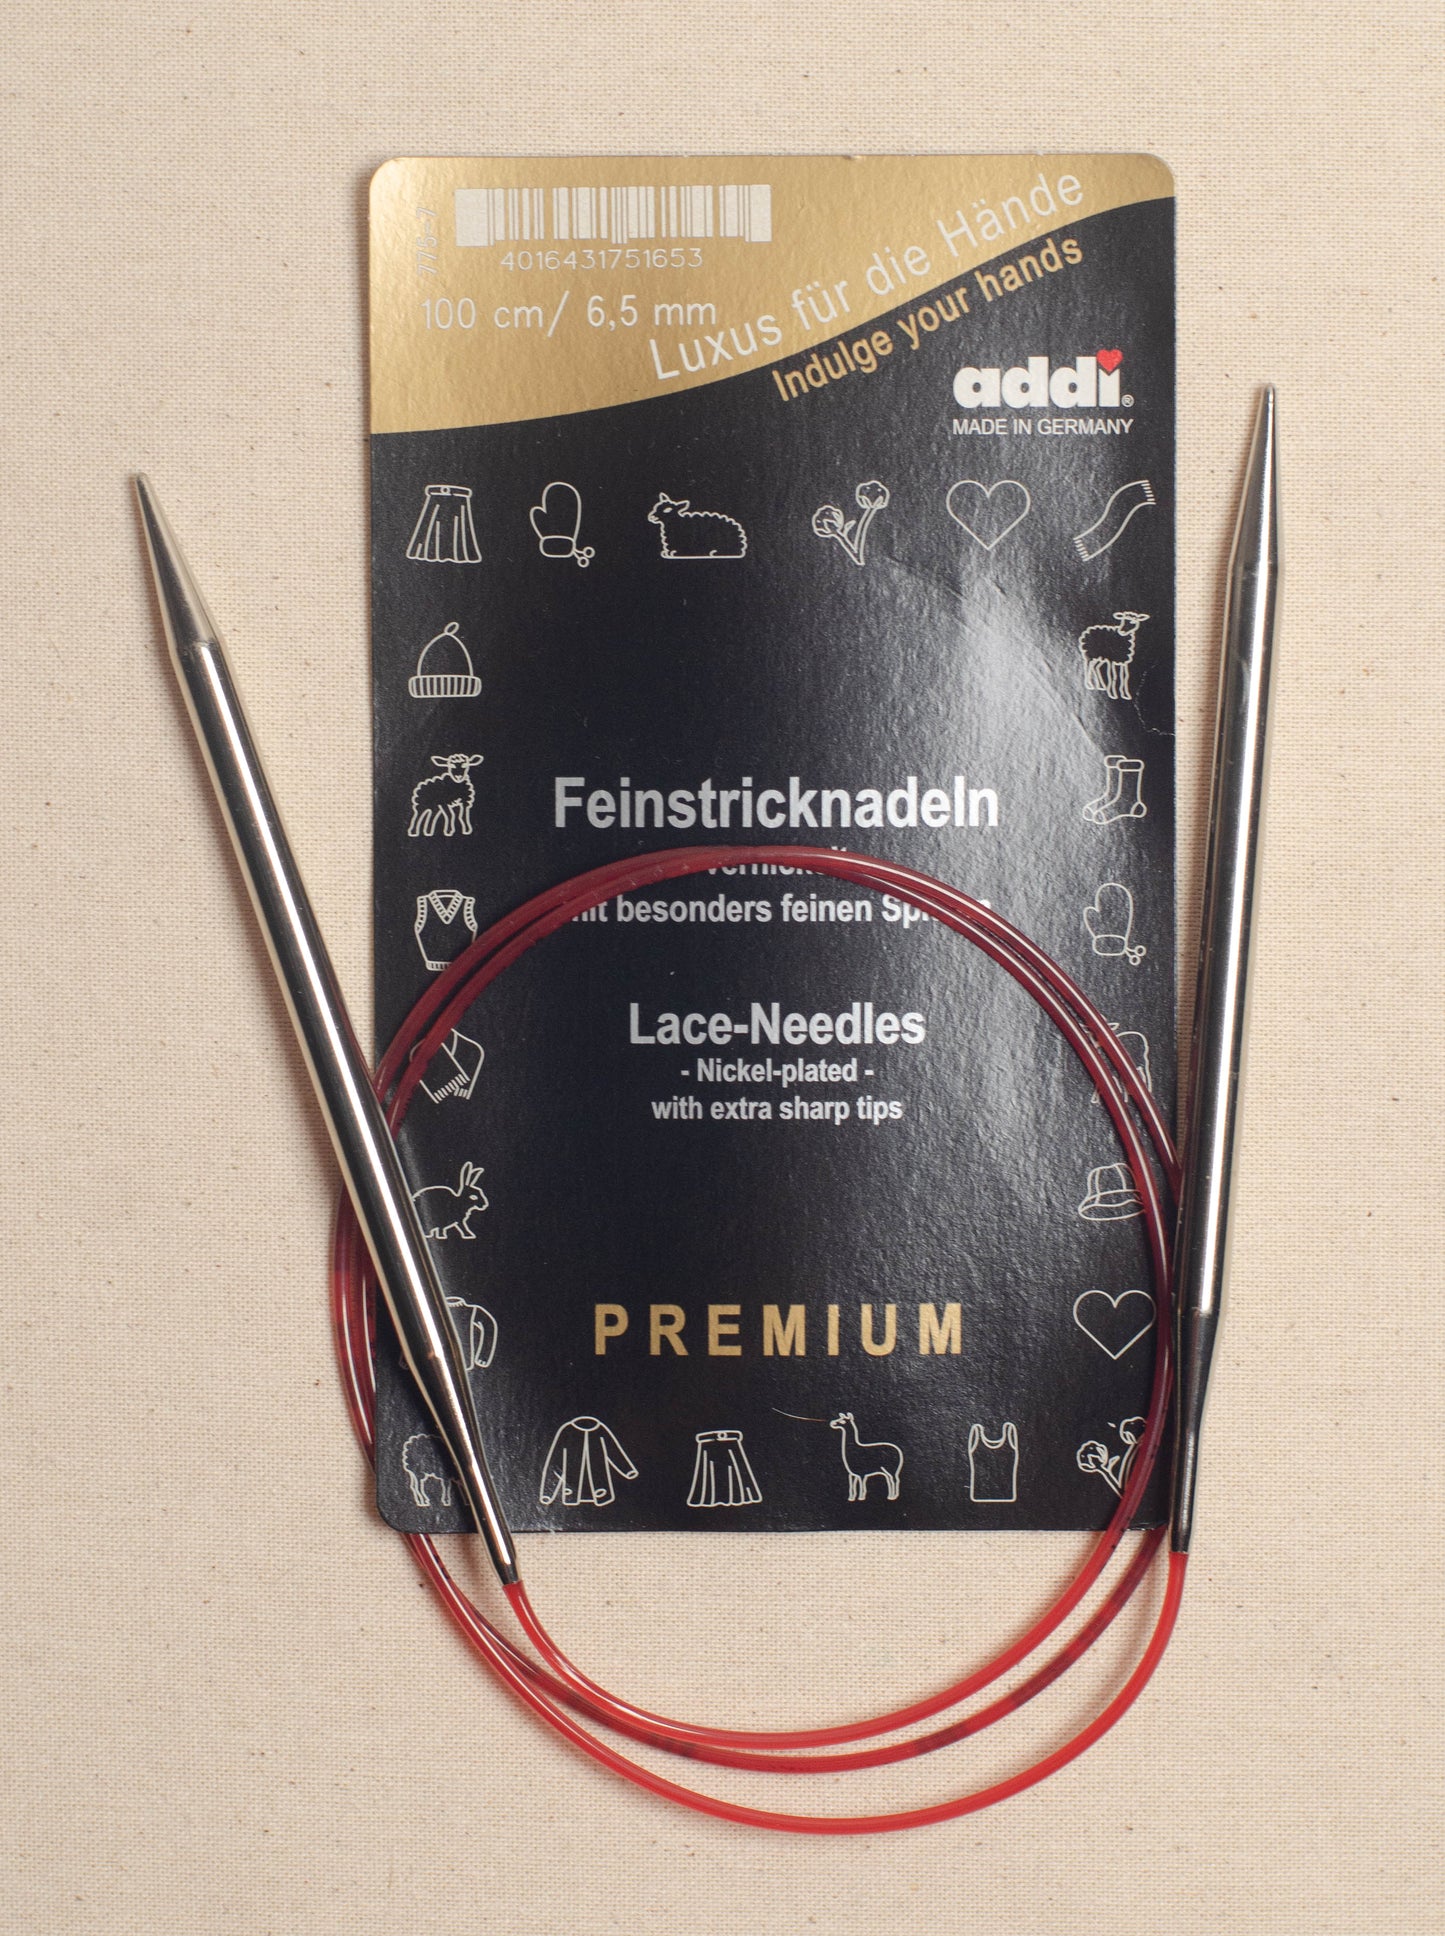 100cm/ 6.5mm Addi Circular Lace Knitting Needles